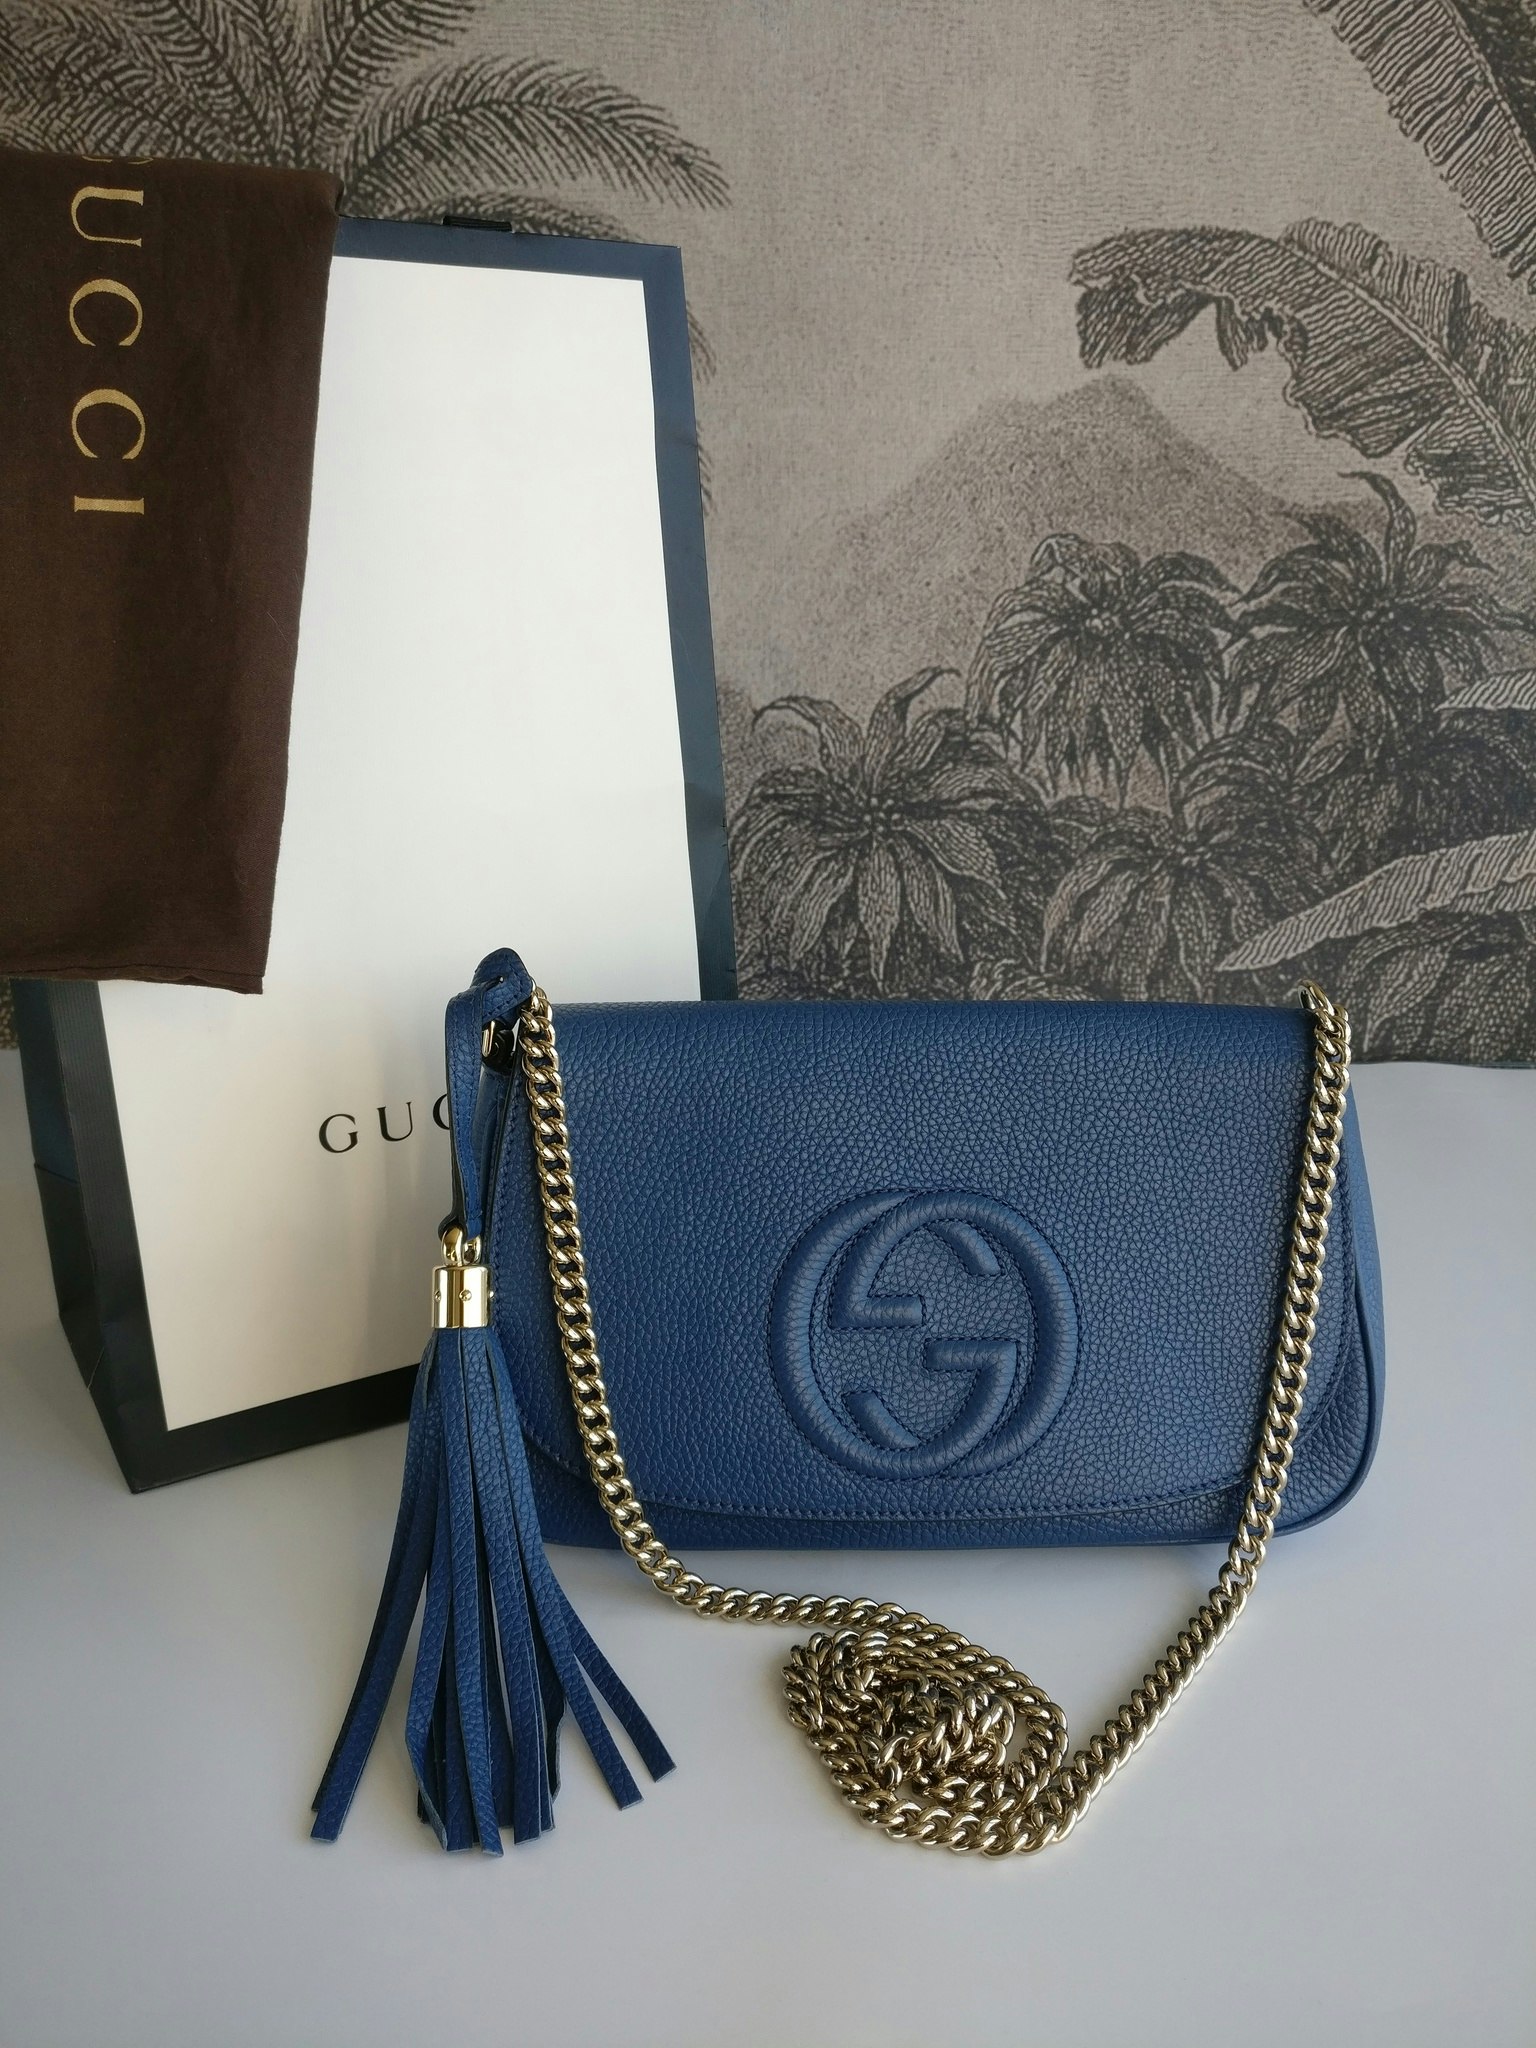 Gucci Soho Long flap chain bag - Good or Bag